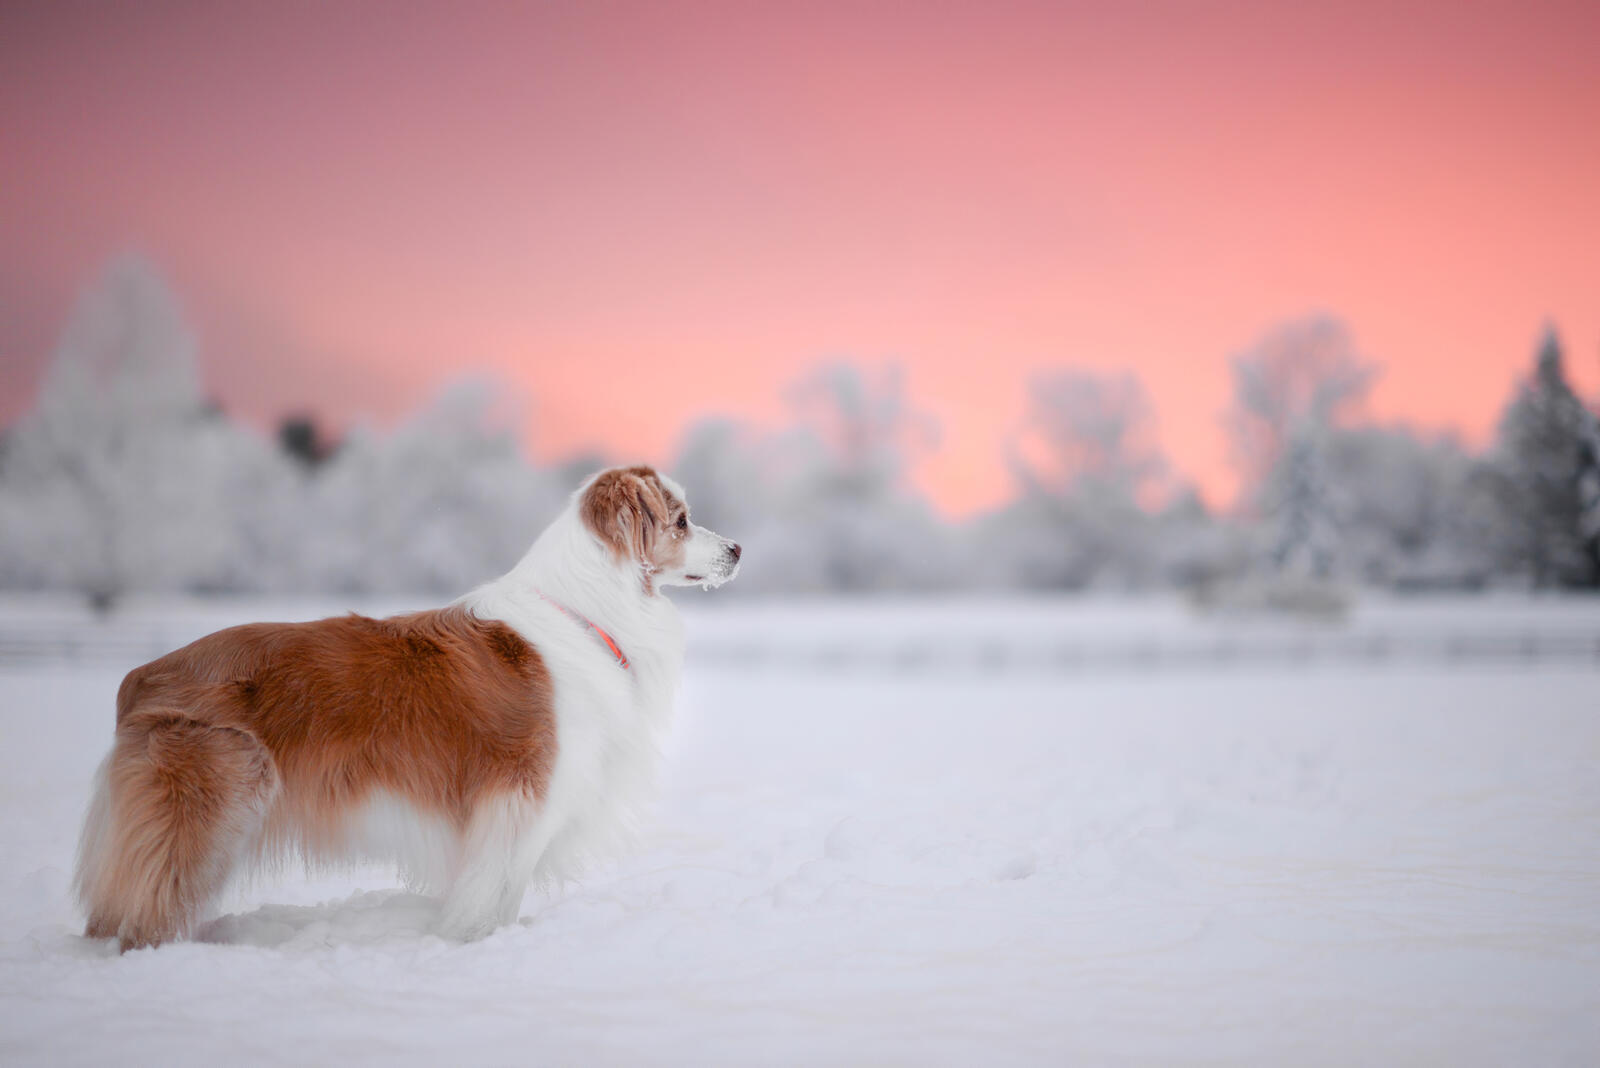 Бесплатное фото Длиношорстая собака зимой на закате